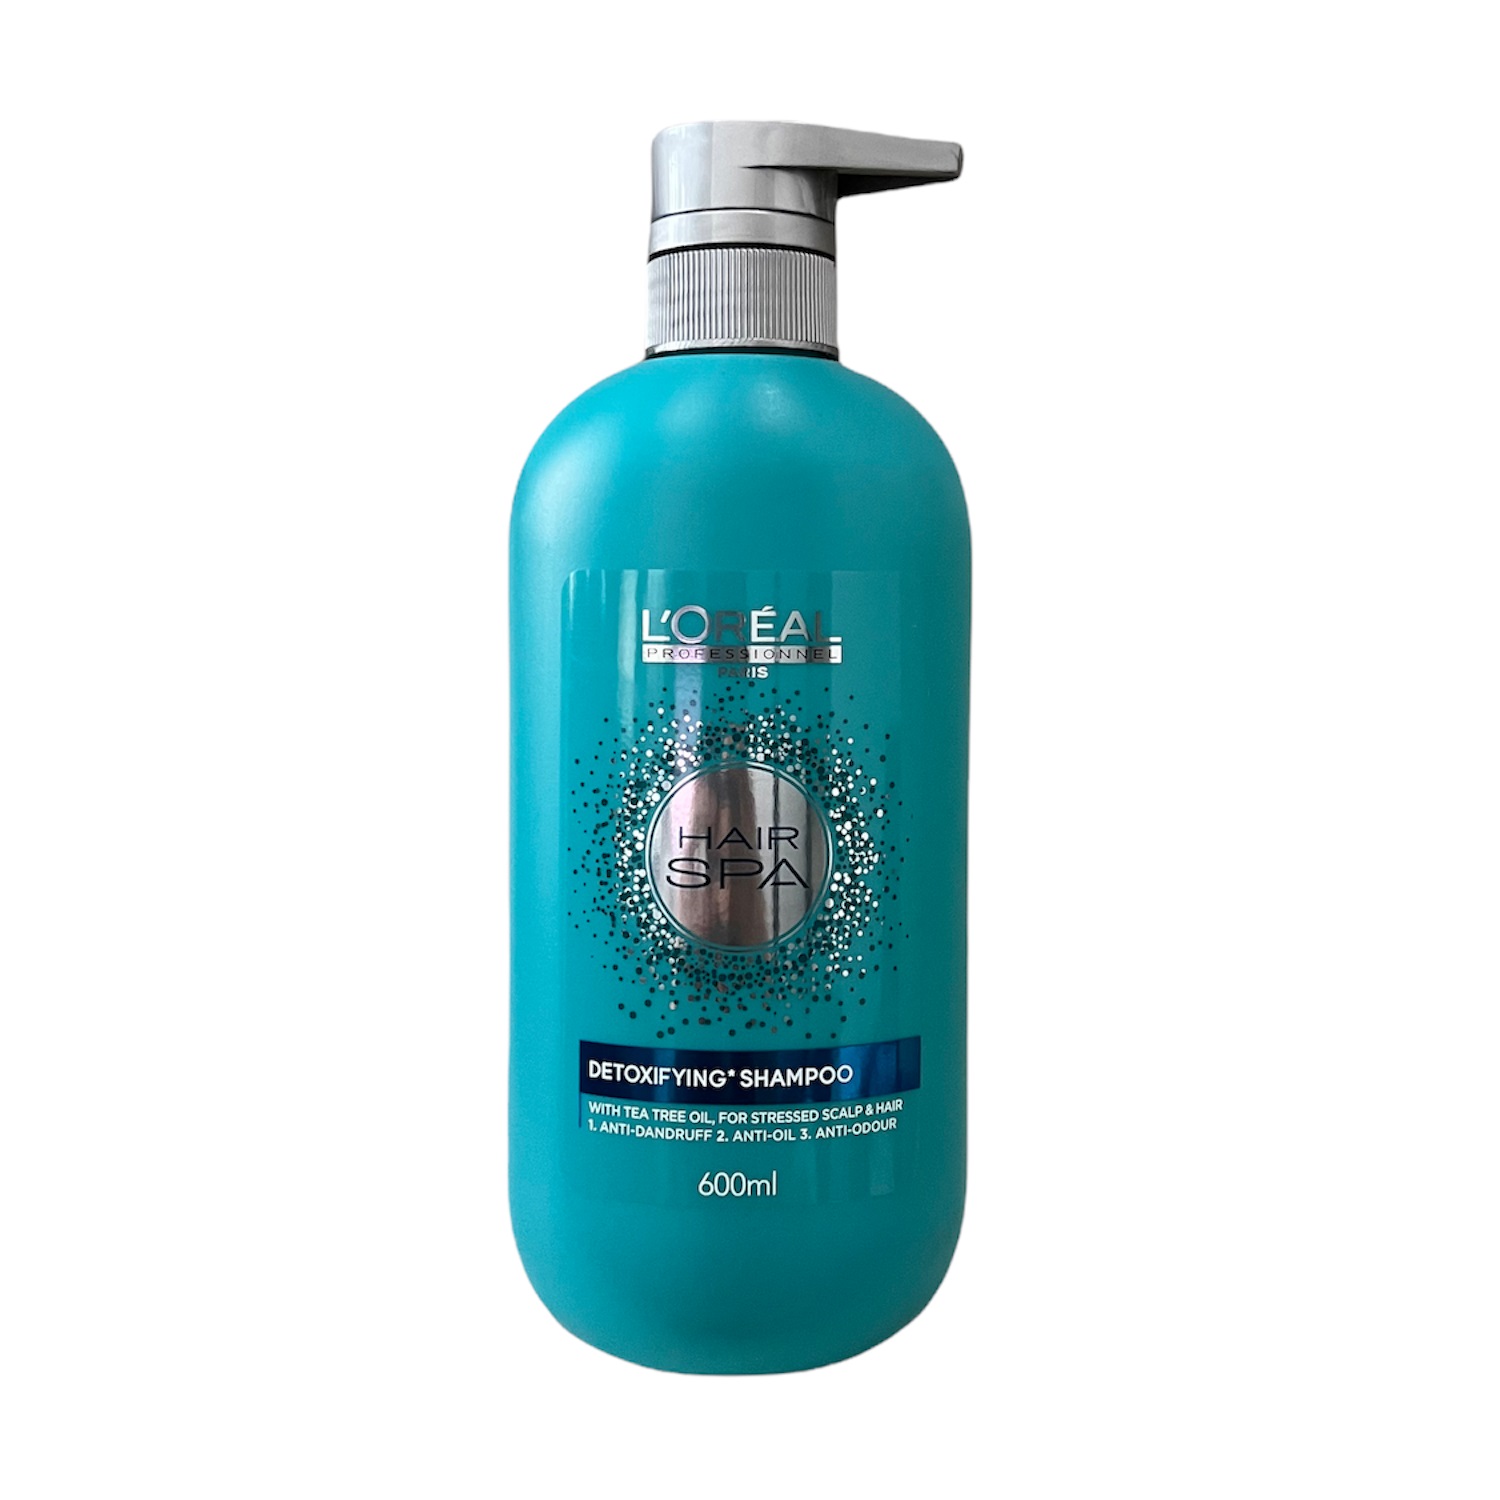 Loreal Hair Spa Detoxifying Shampoo - 600ml | Lazada